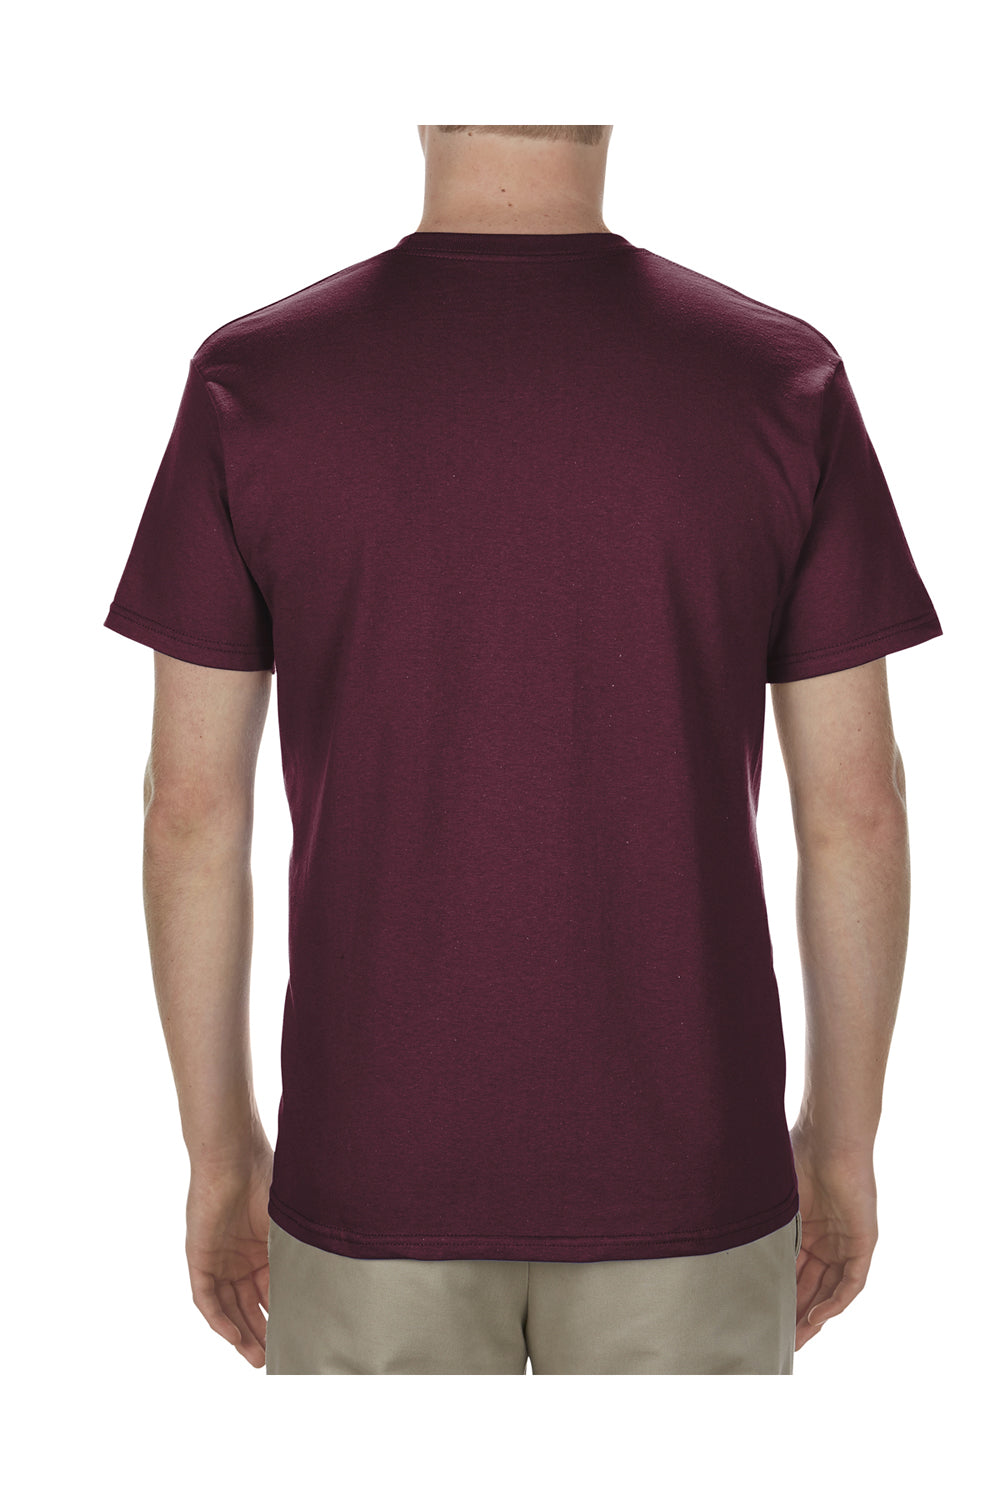 Alstyle AL1701 Mens Soft Spun Short Sleeve Crewneck T-Shirt Burgundy Back